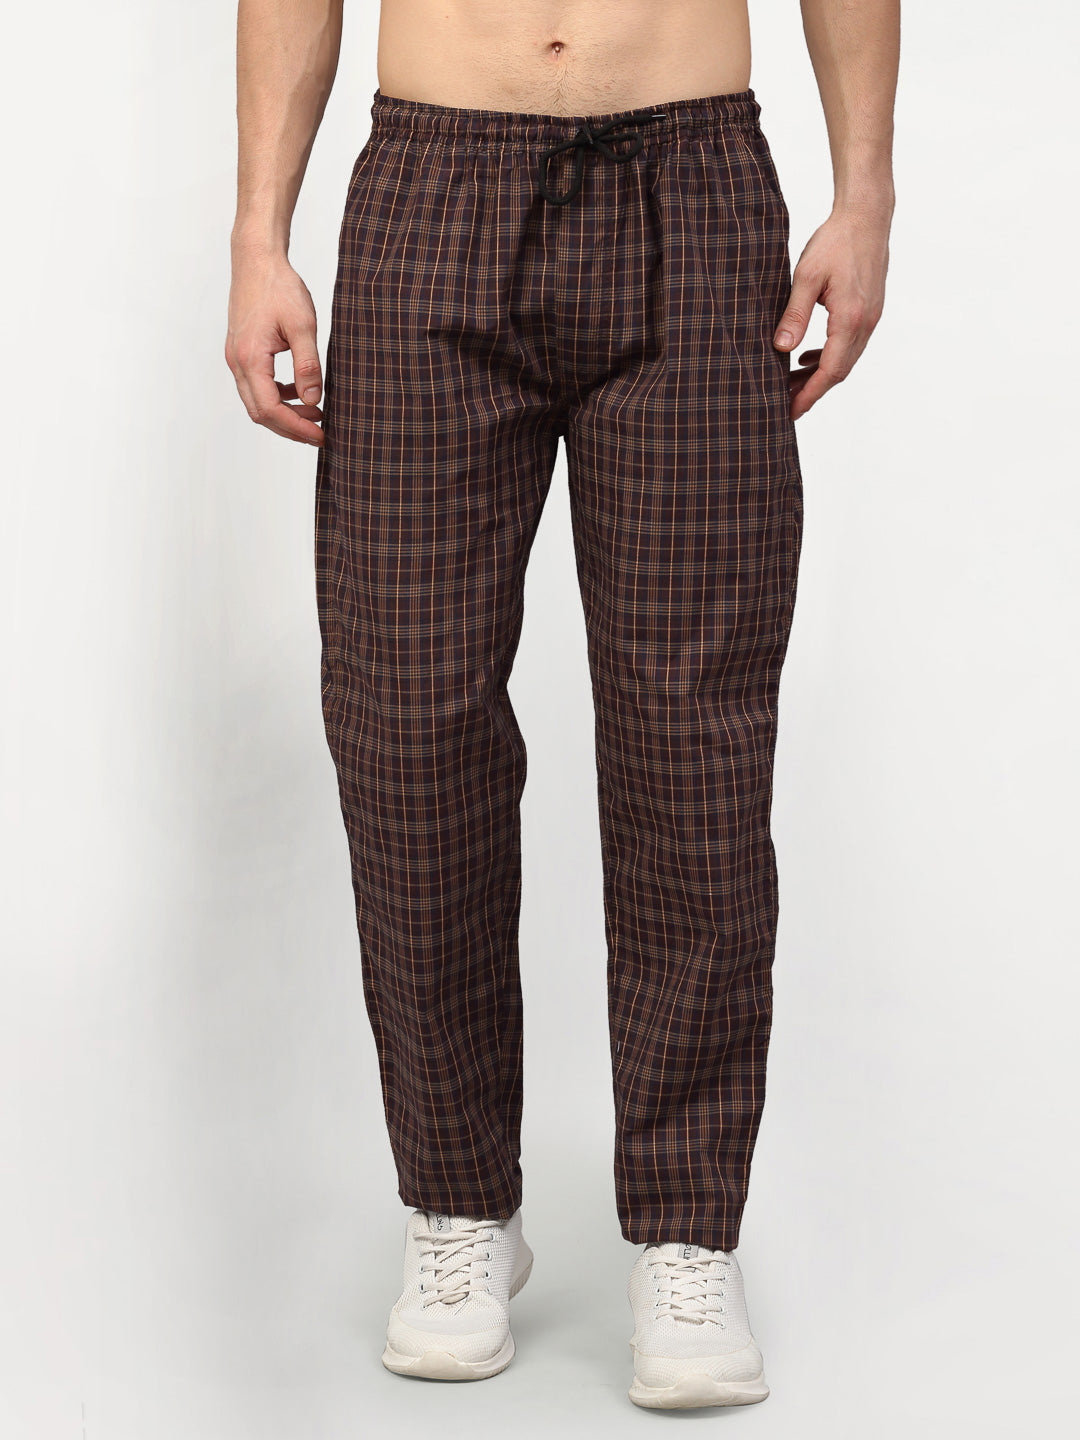 Men's Brown Cotton Checked Track Pants ( JOG 015Brown ) - Jainish